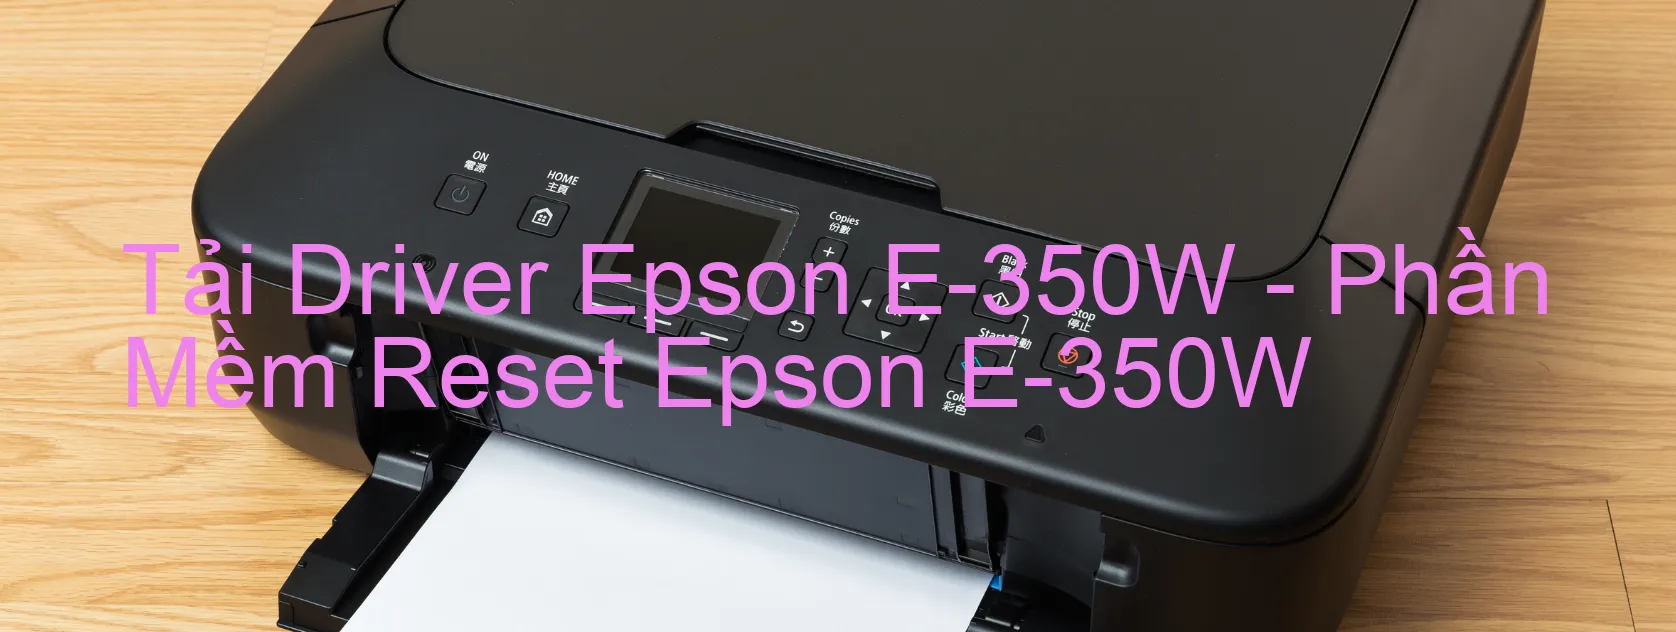 Driver Epson E-350W, Phần Mềm Reset Epson E-350W